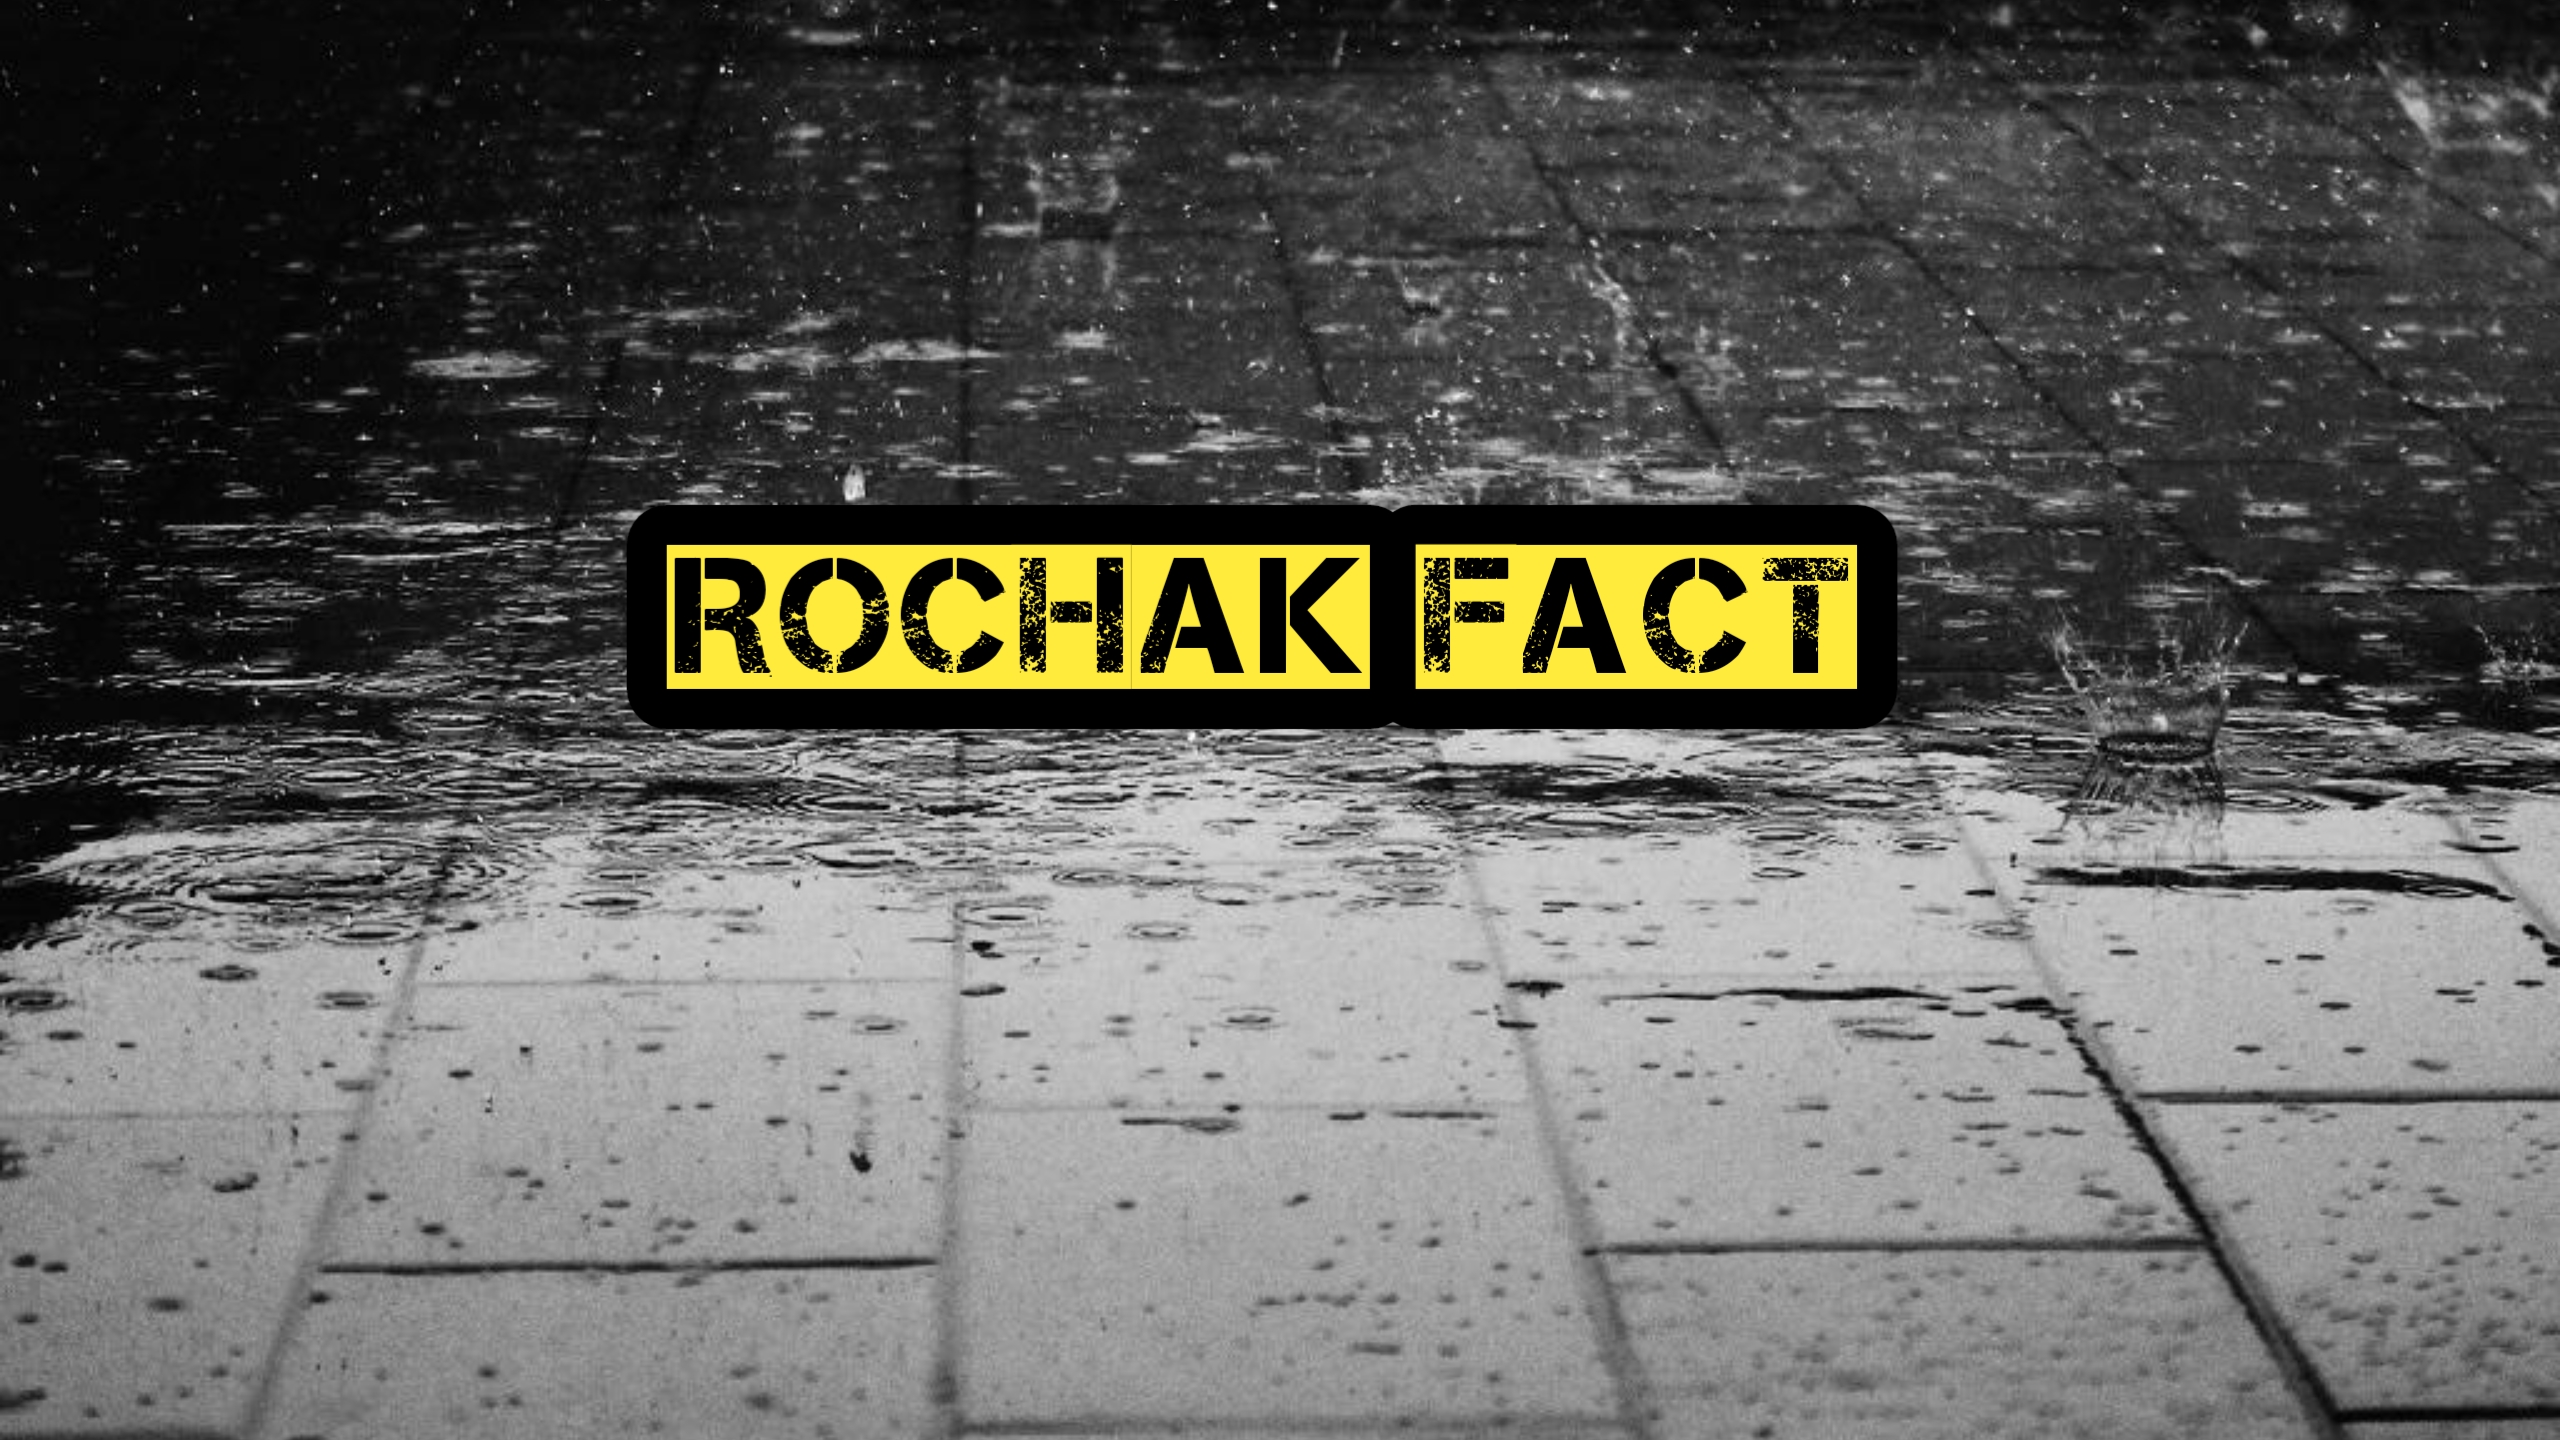 Rochak fact